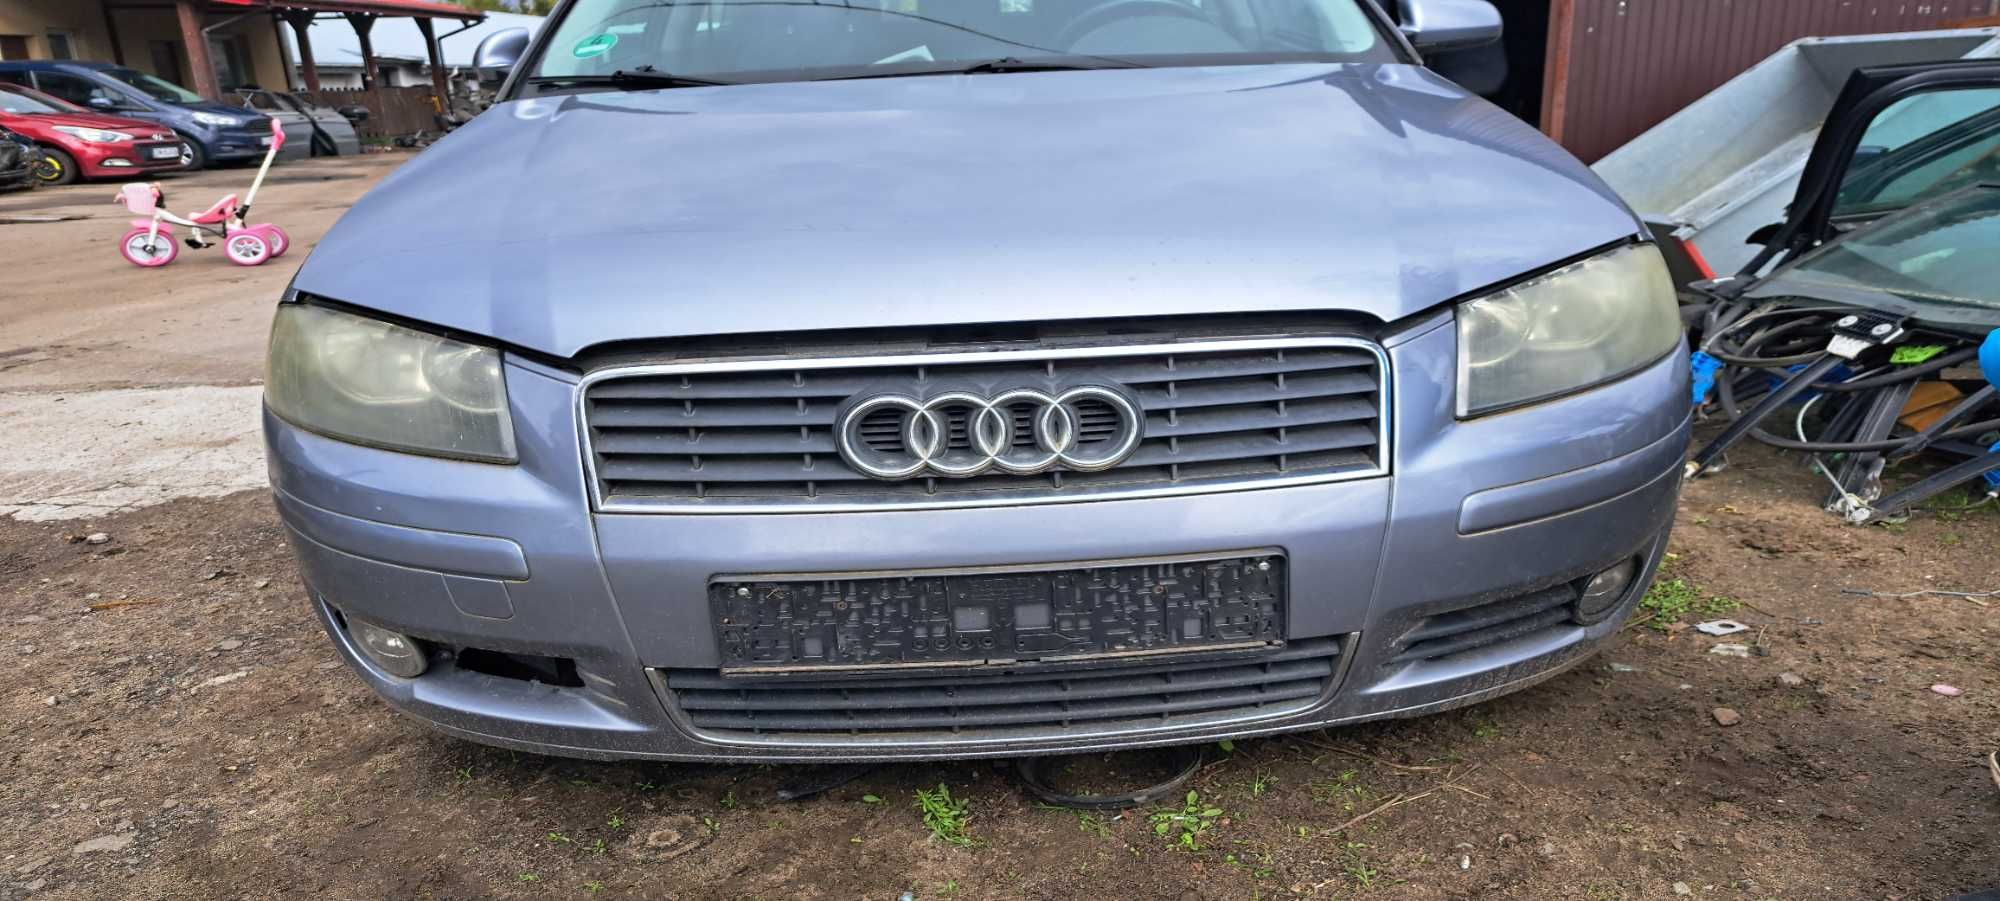 Maglownica przekładnia Audi volkswagen seat